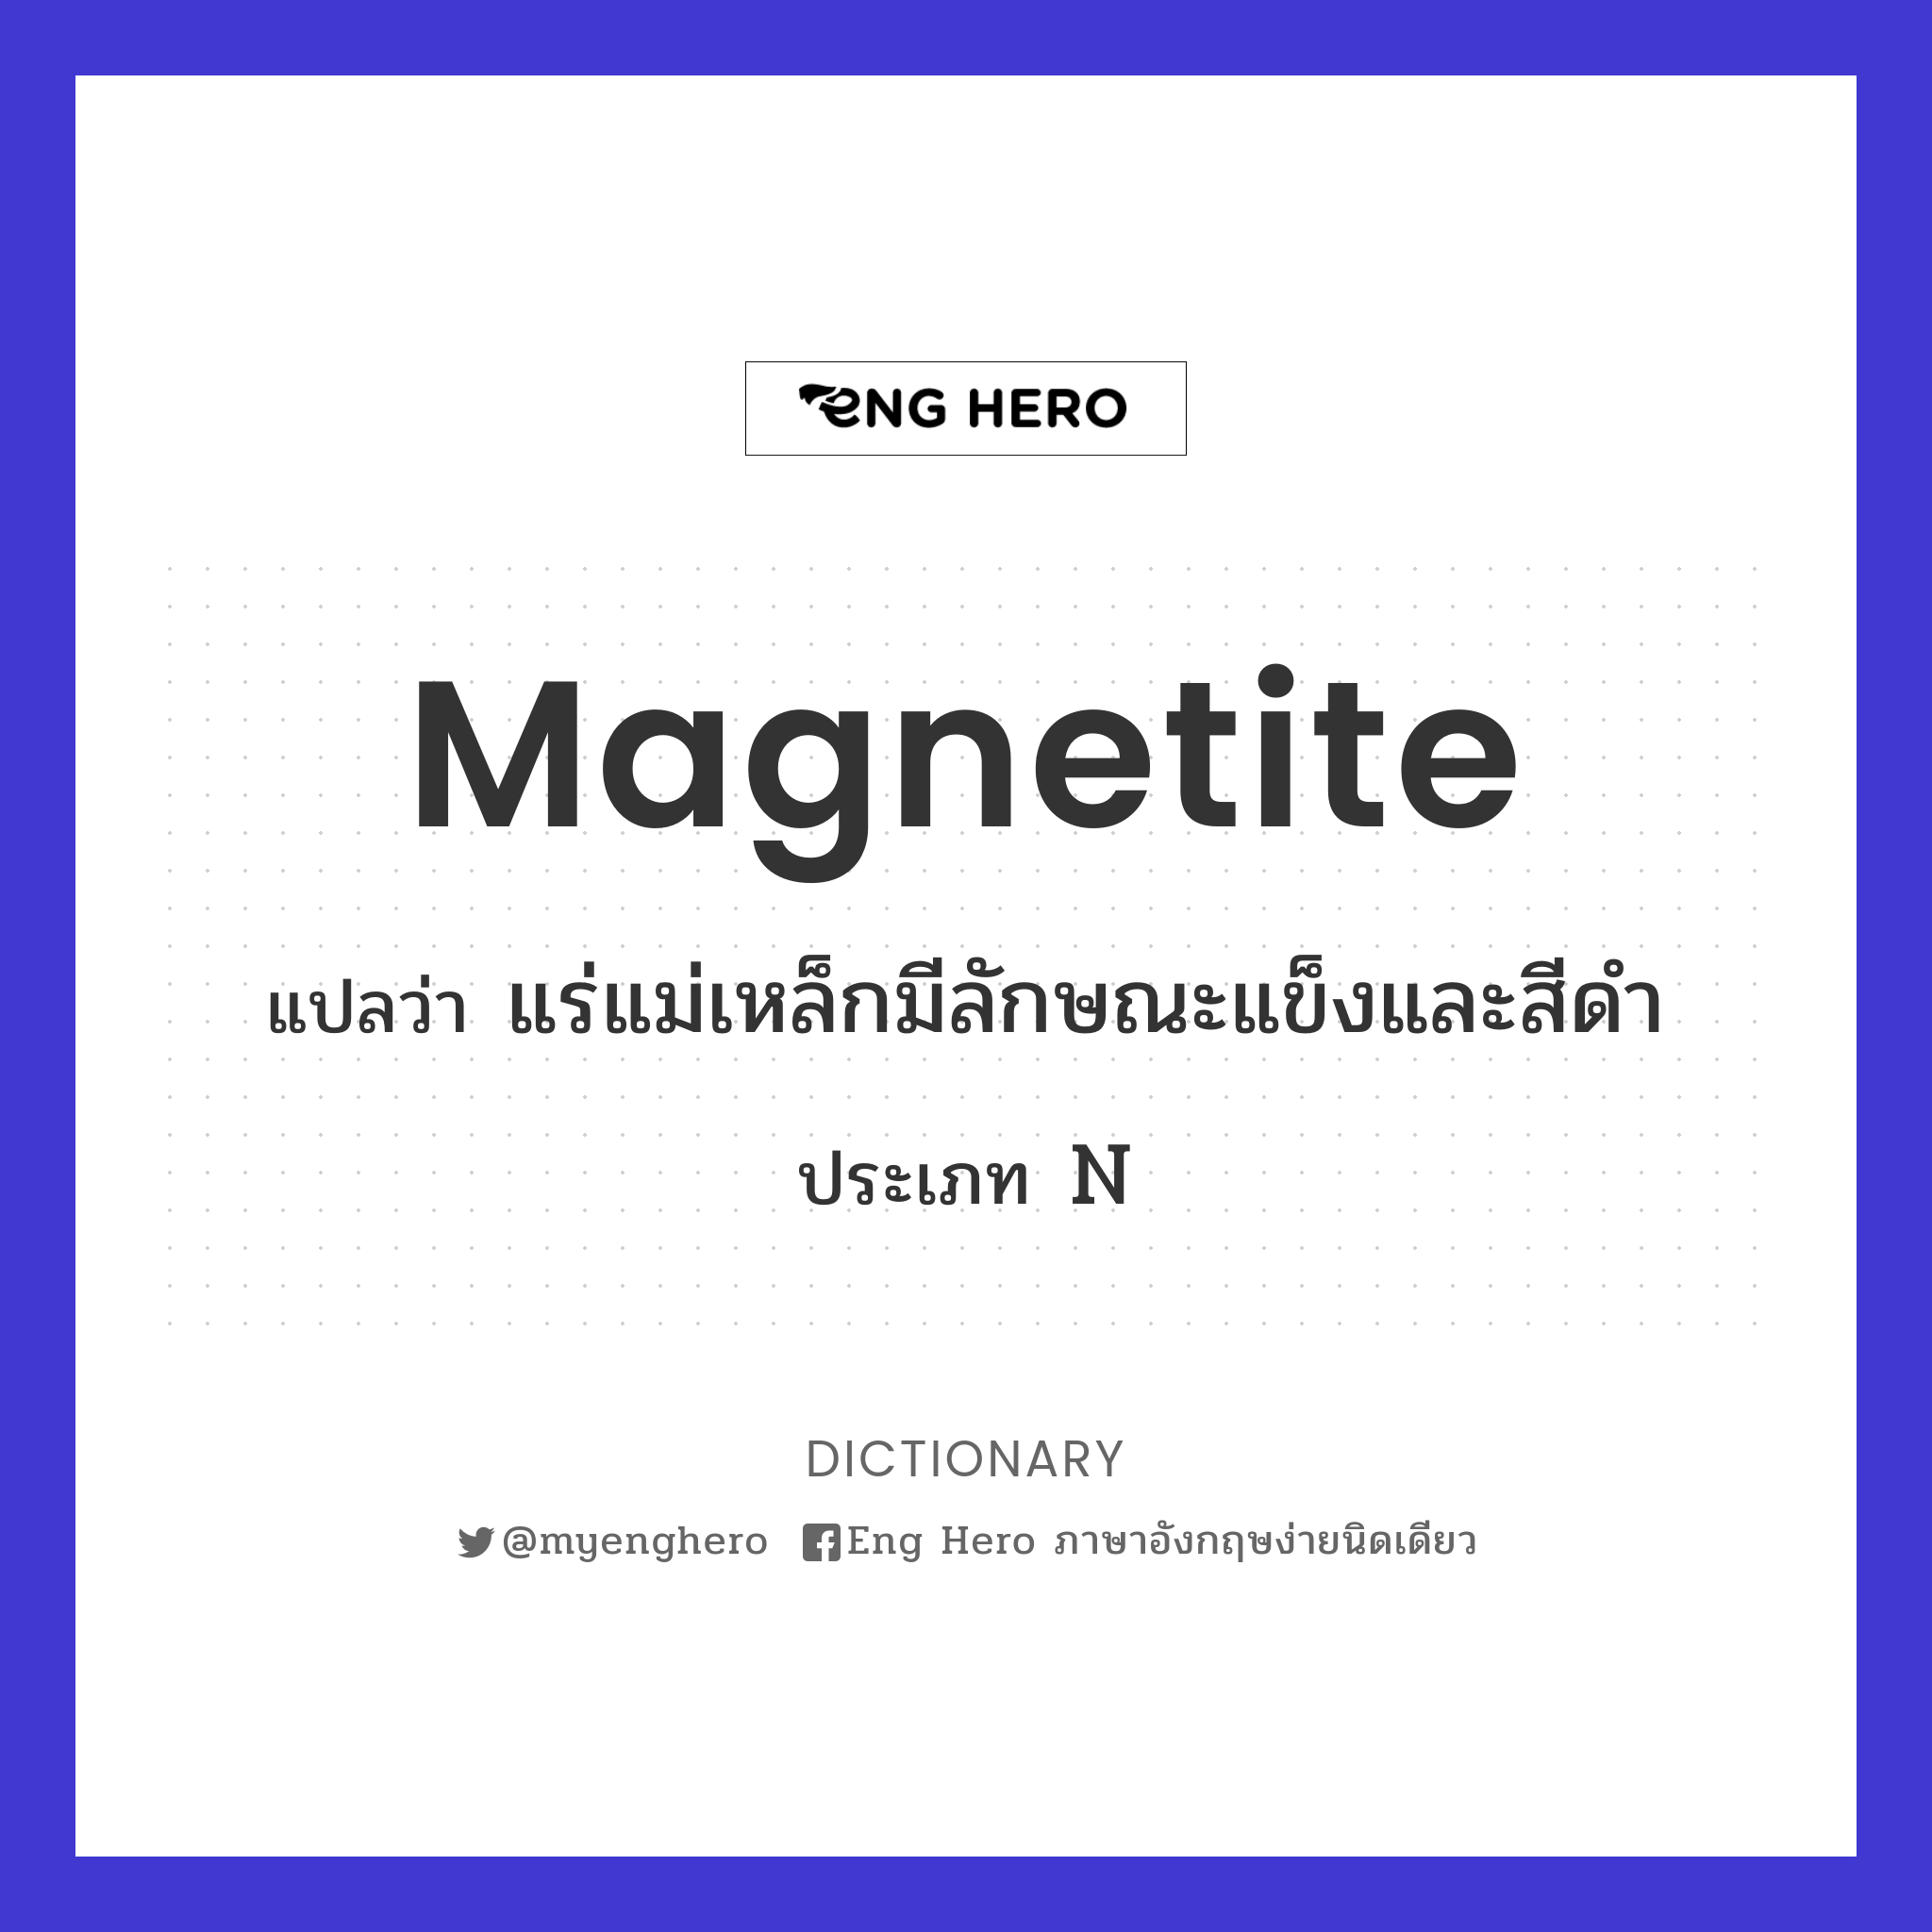 magnetite